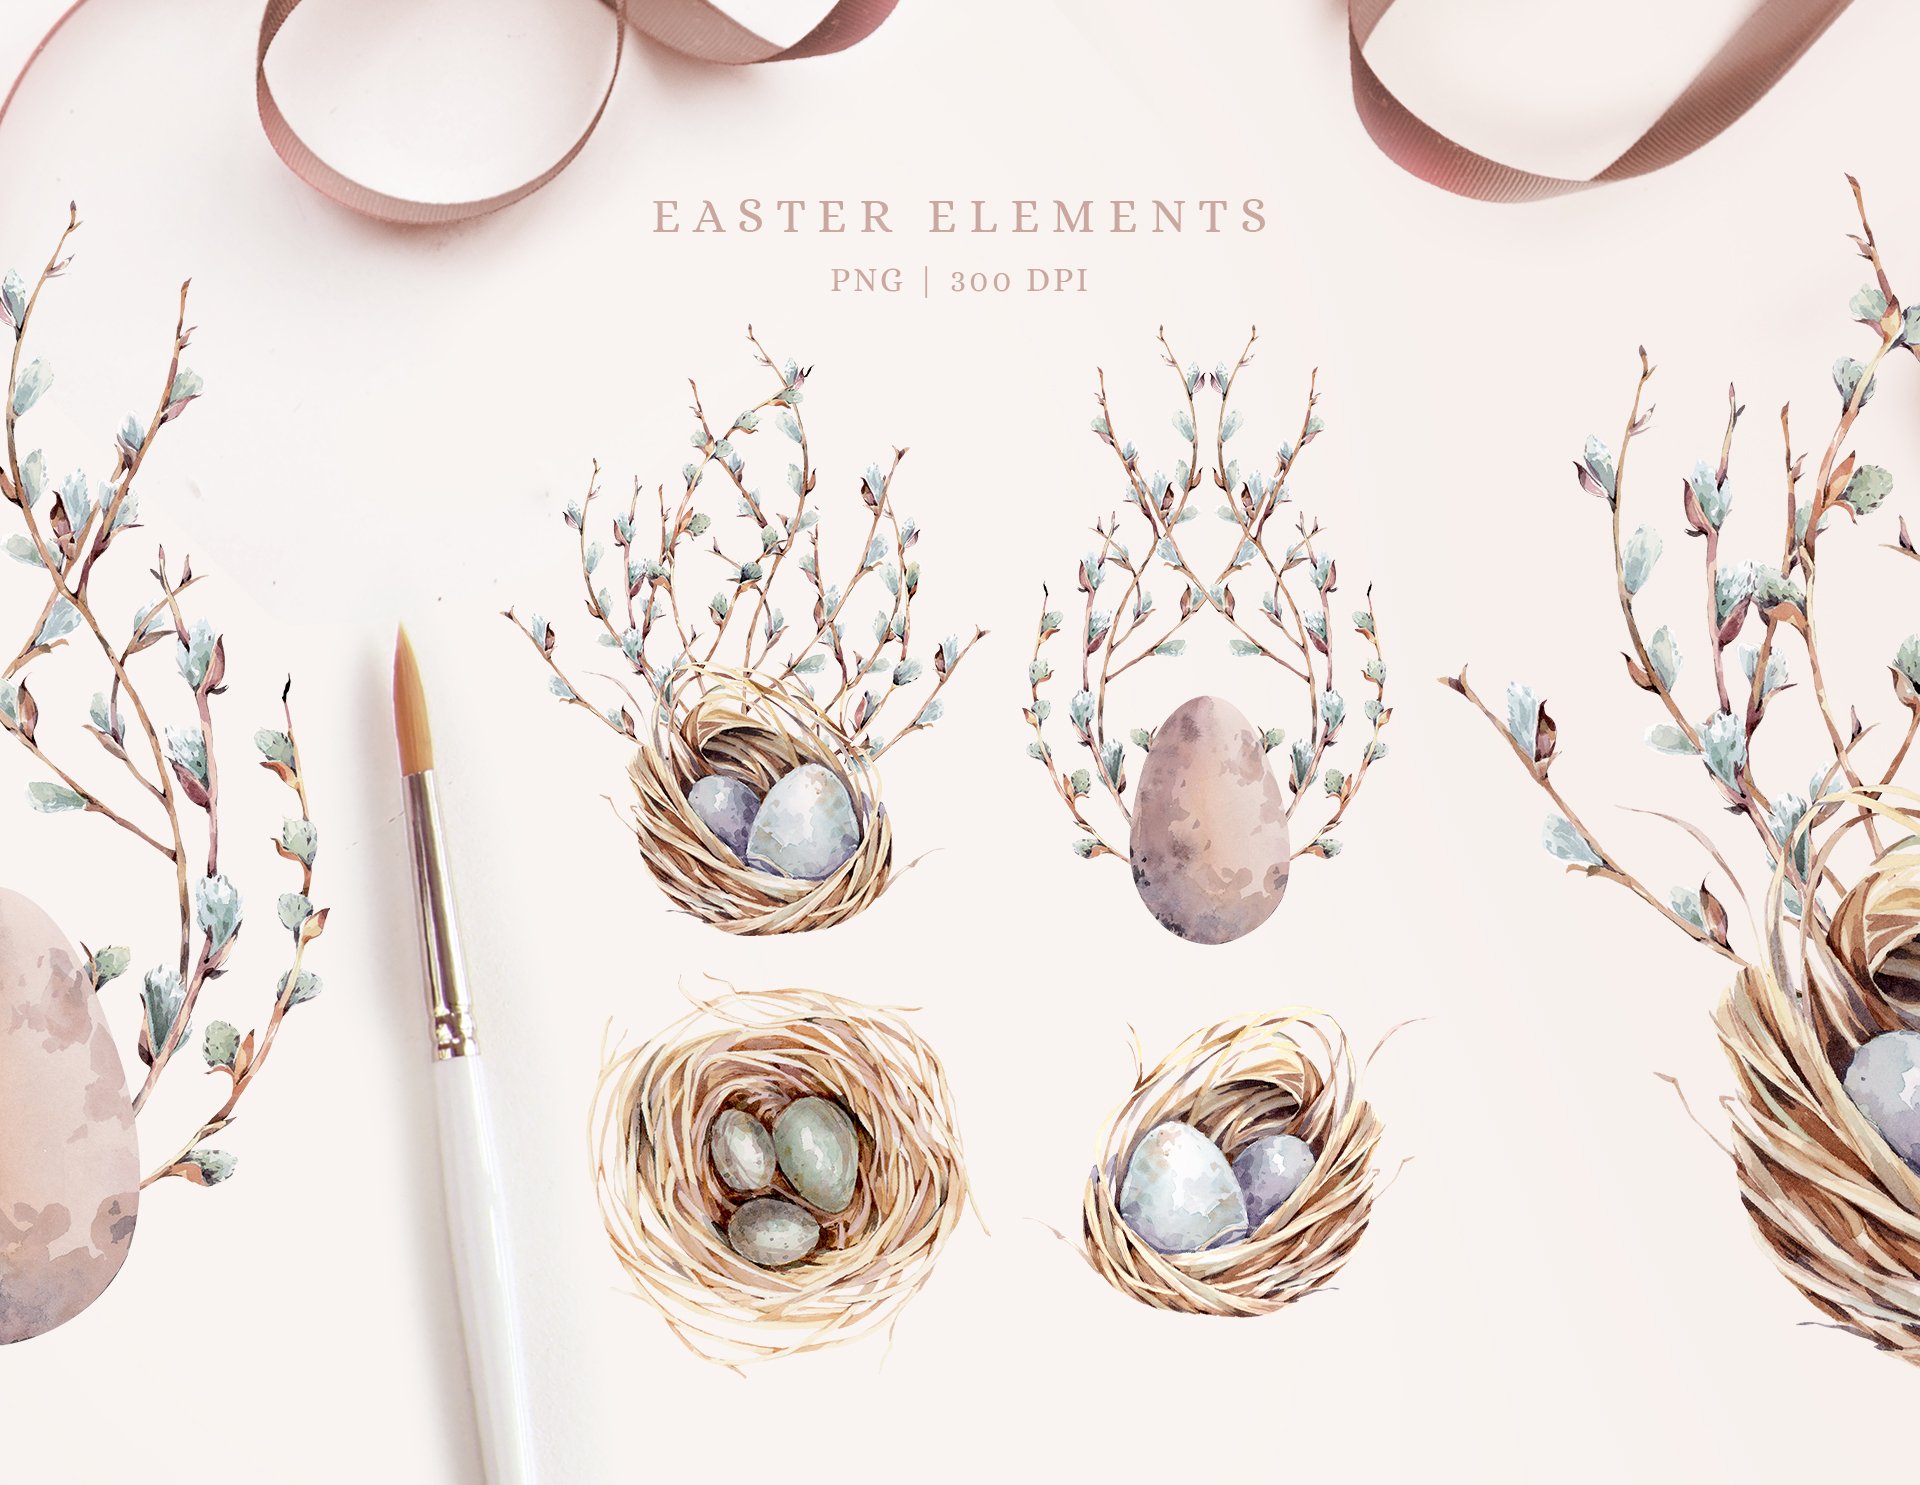 So creative and beautiful eggs illustration.